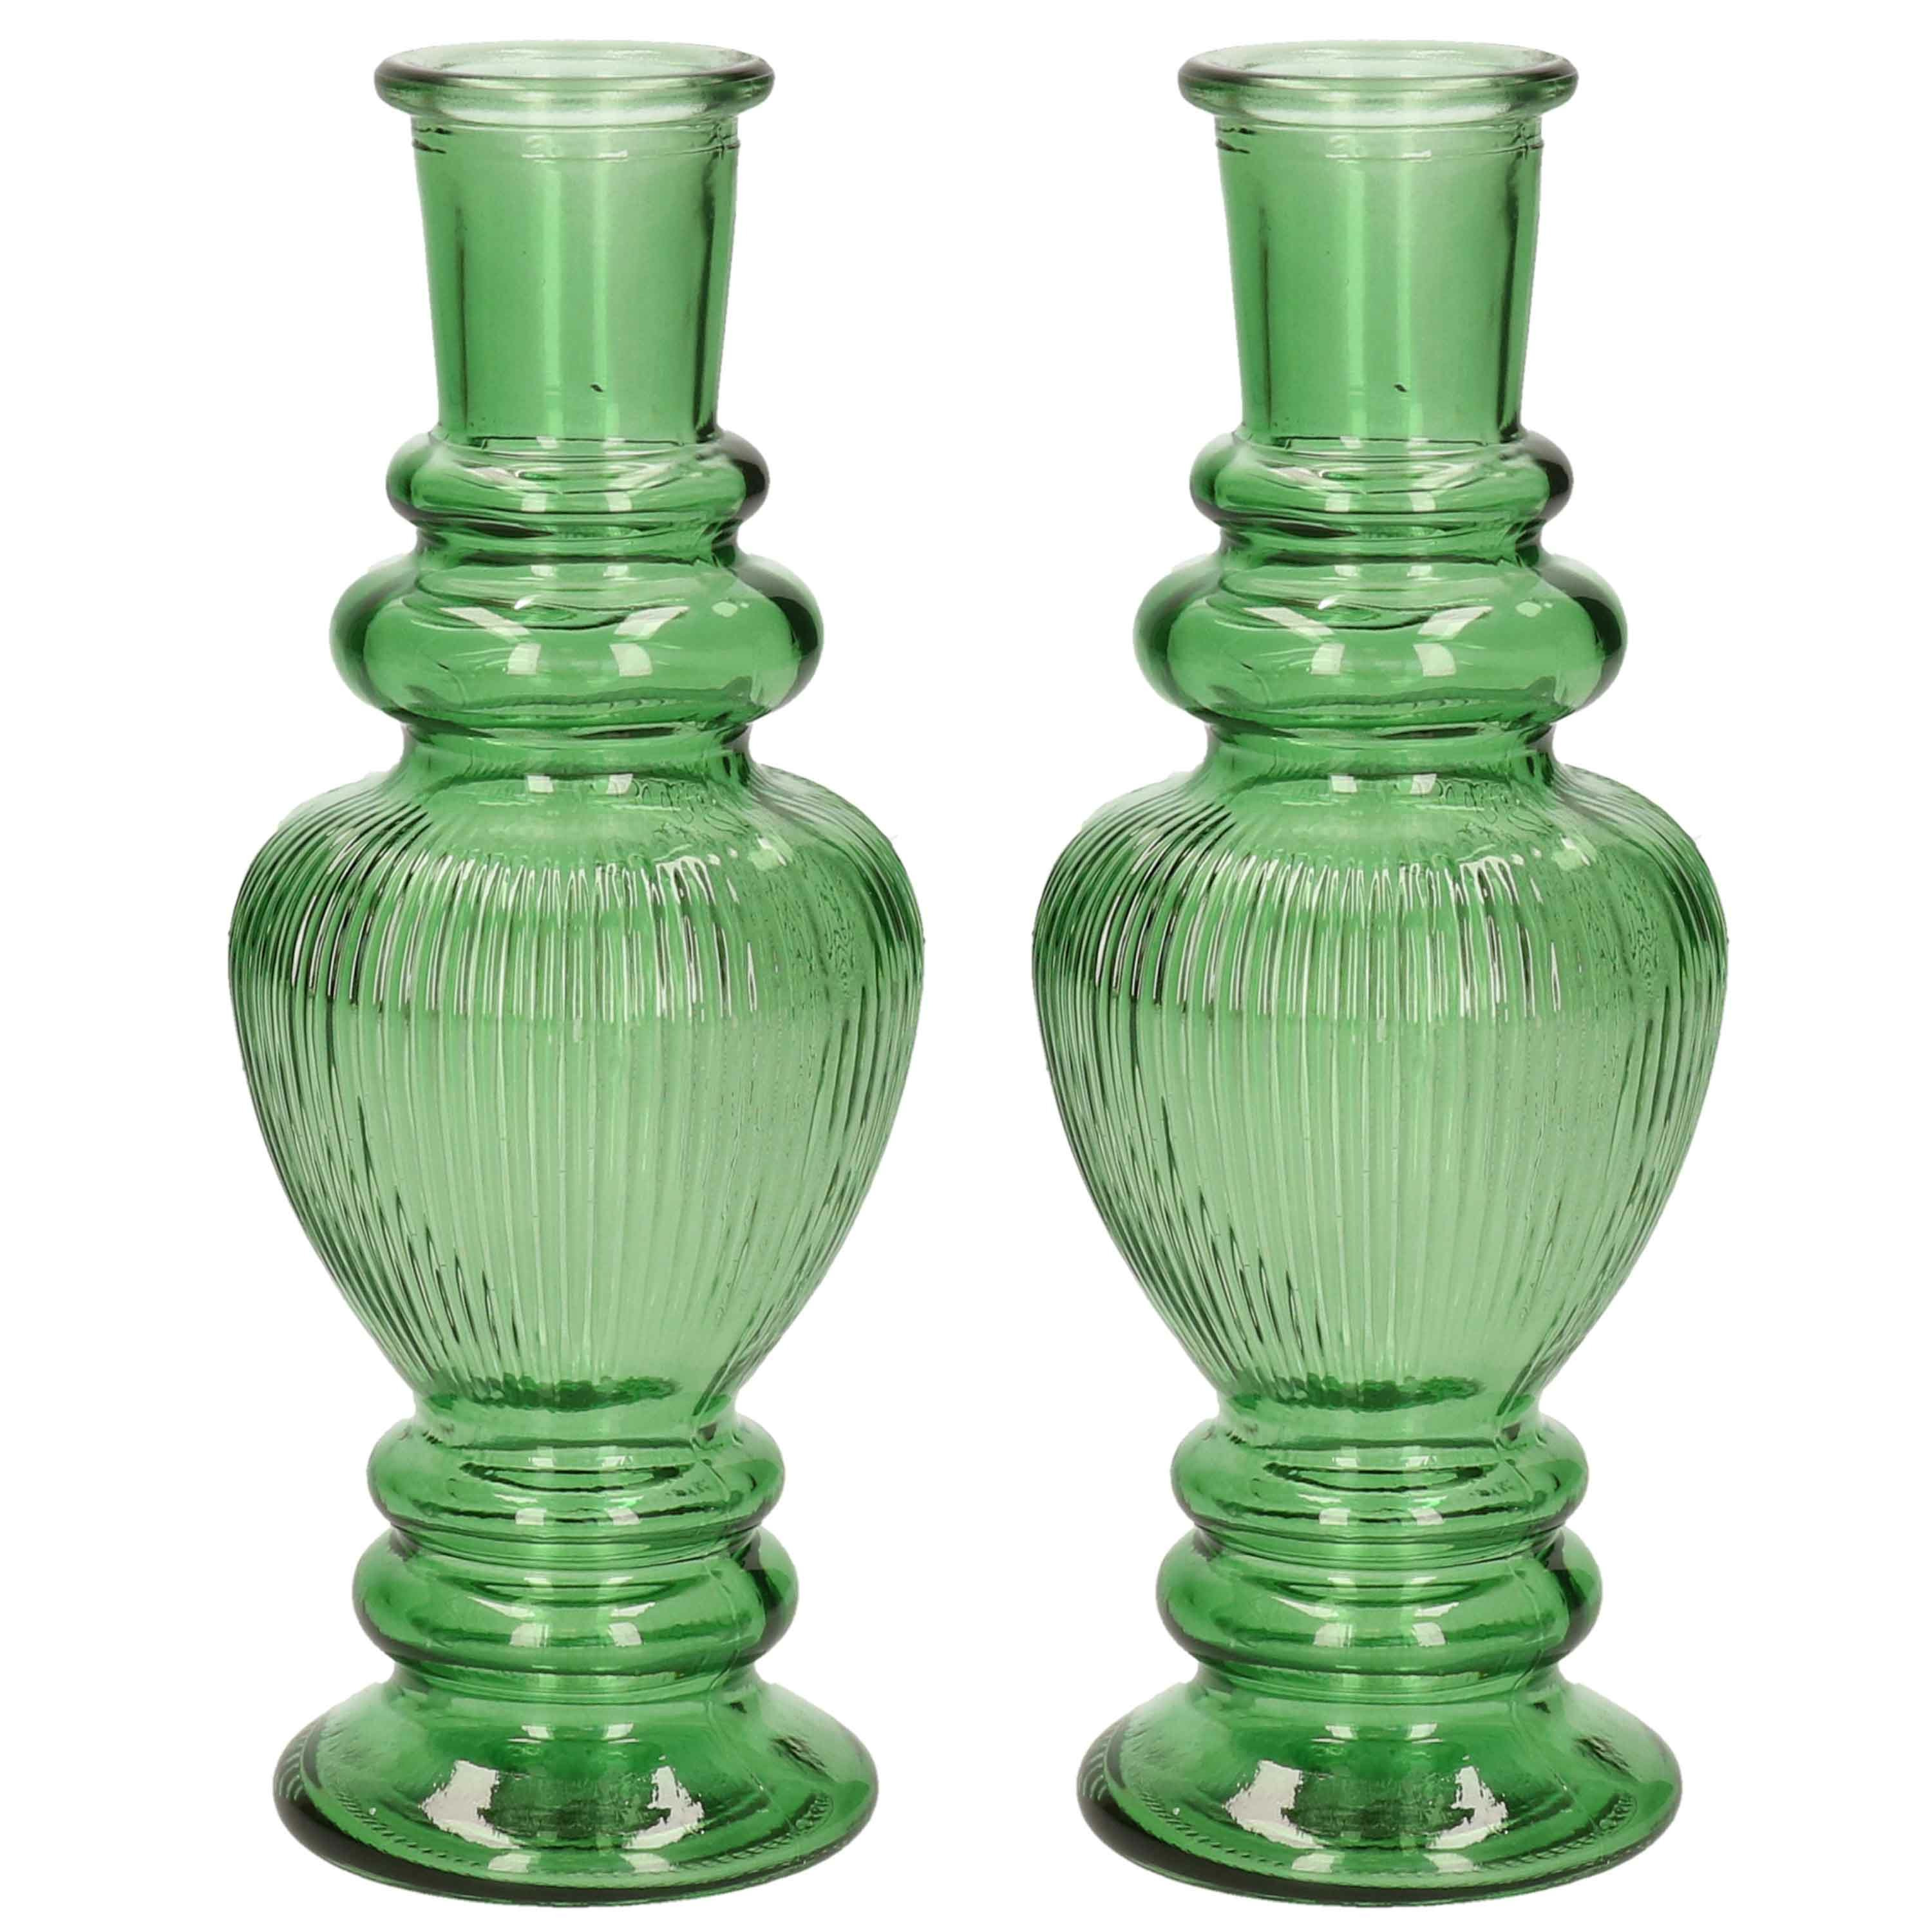 Kaarsen kandelaar Venice 2x gekleurd glas ribbel groen D5,7 x H15 cm